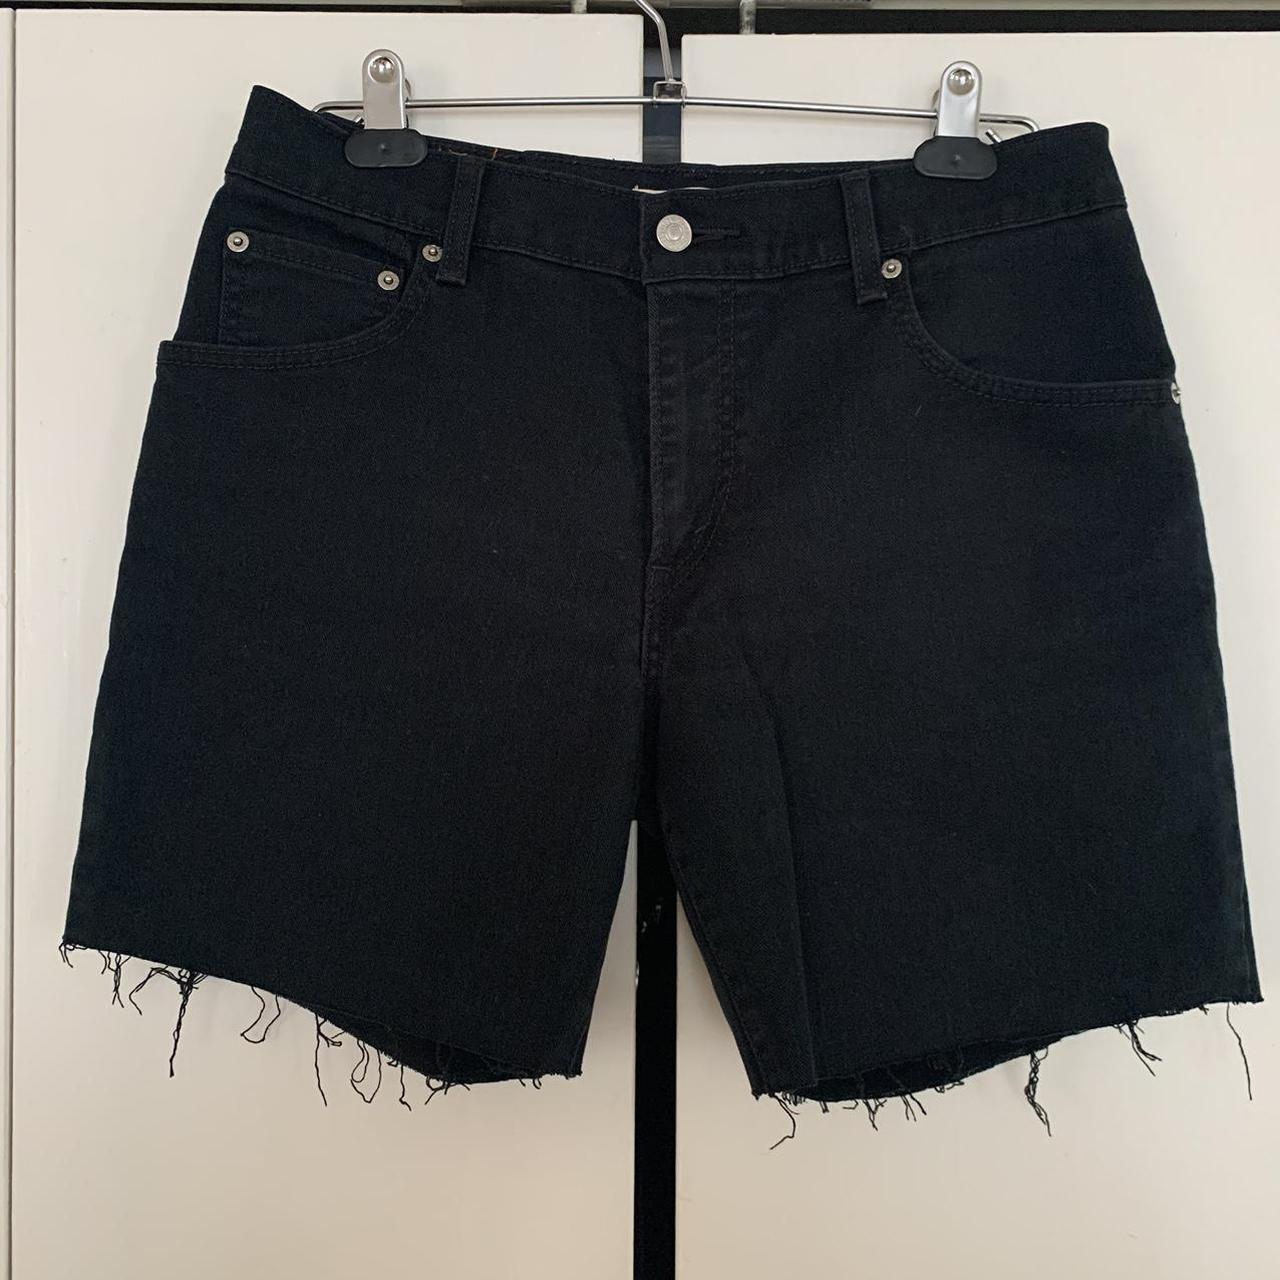 Levi’s 550 #cutoff #denim #jean shorts - Depop